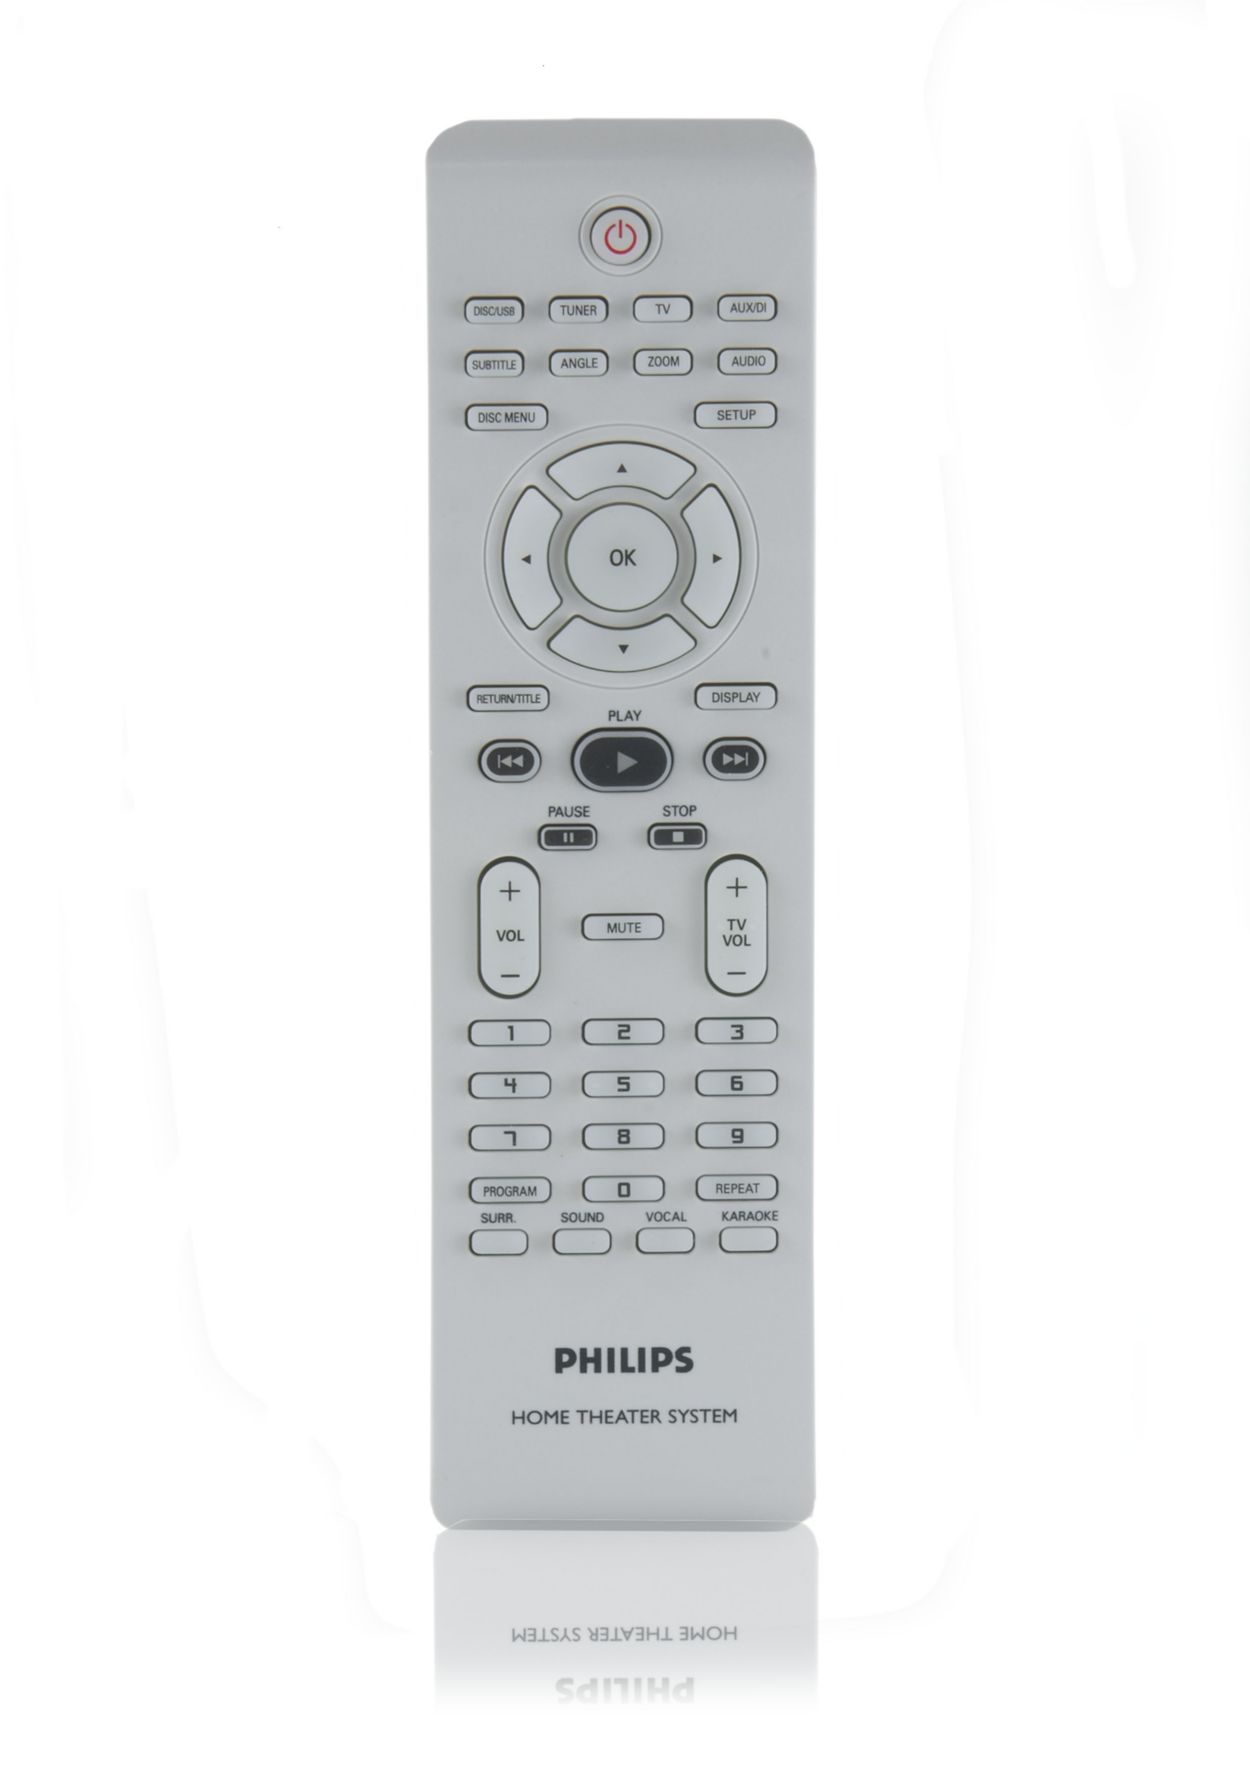 Telecommande Philips Accessoire Audio Video - Promos Soldes Hiver